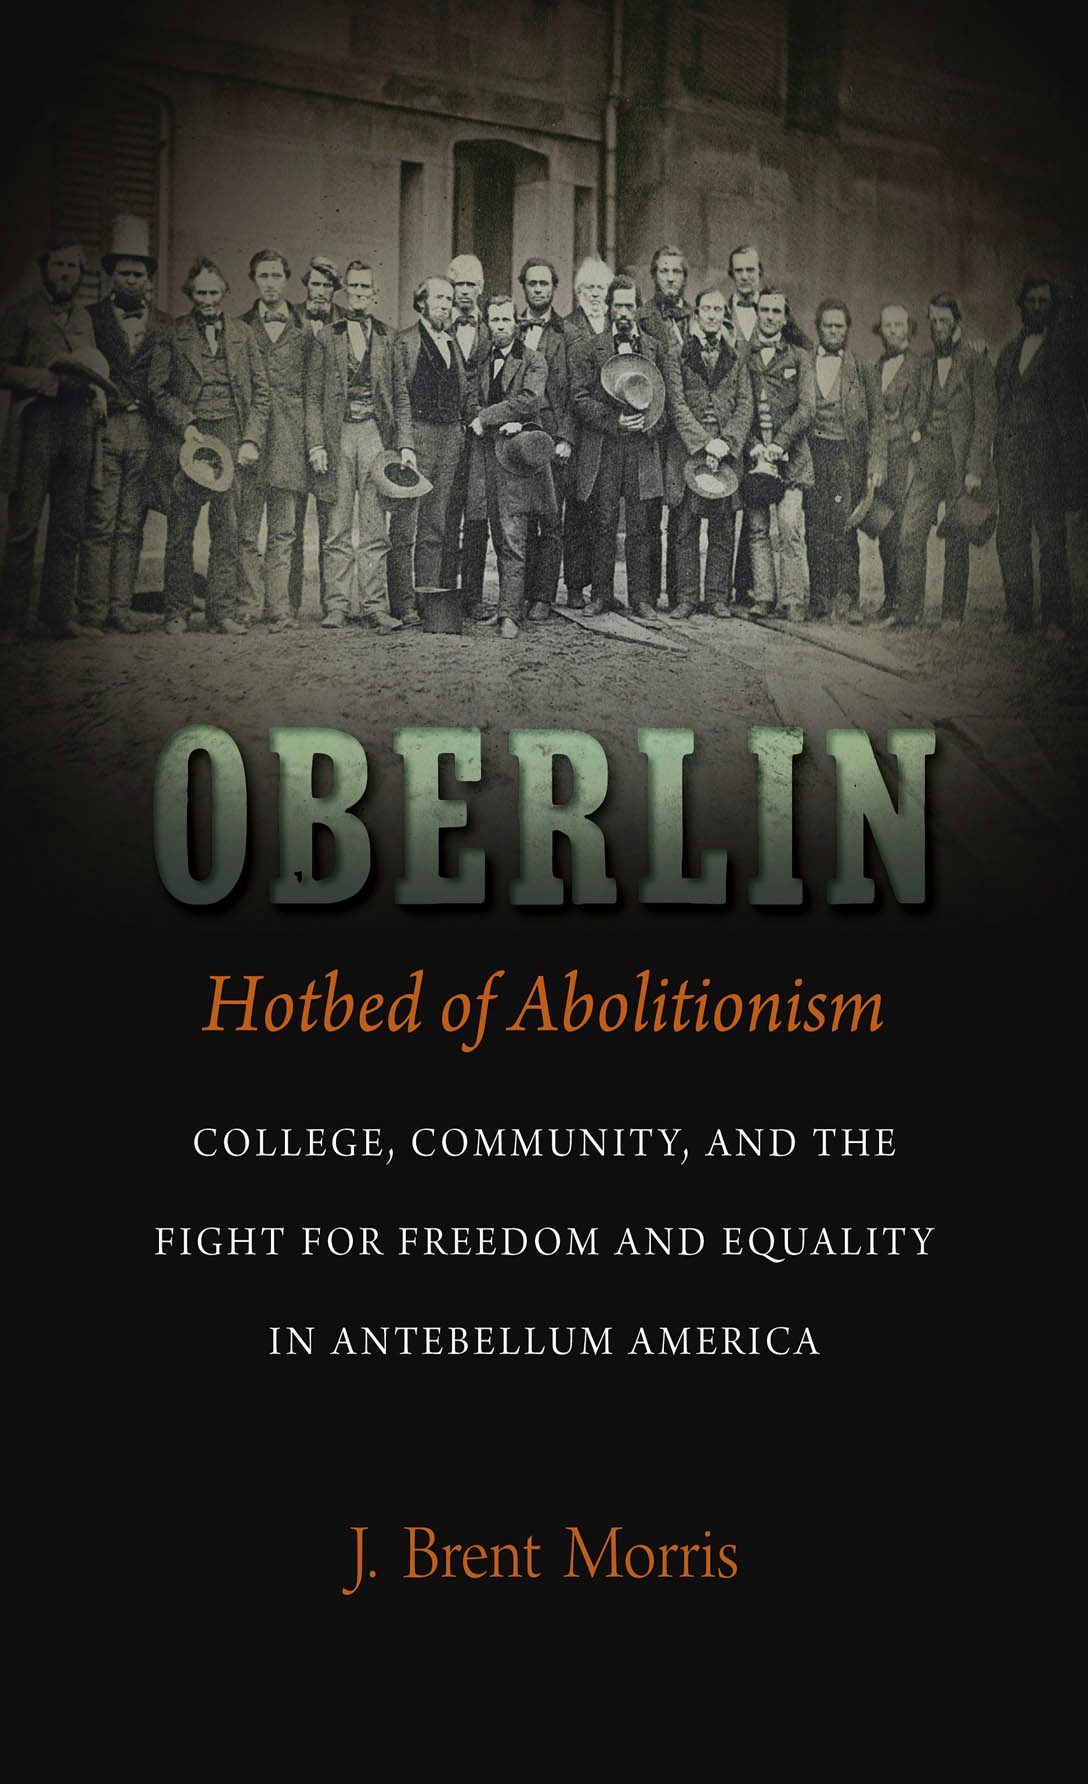  Oberlin, Foyer de l'abolitionnisme